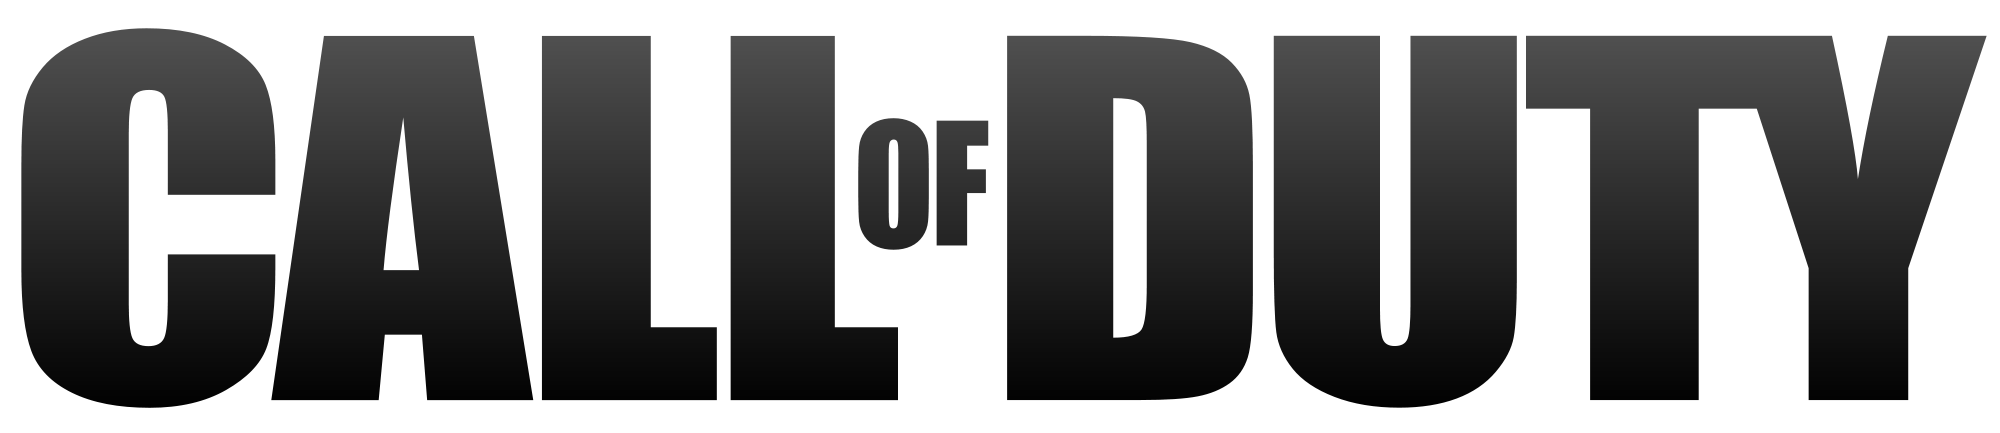 Call Of Duty – Logos Downlo